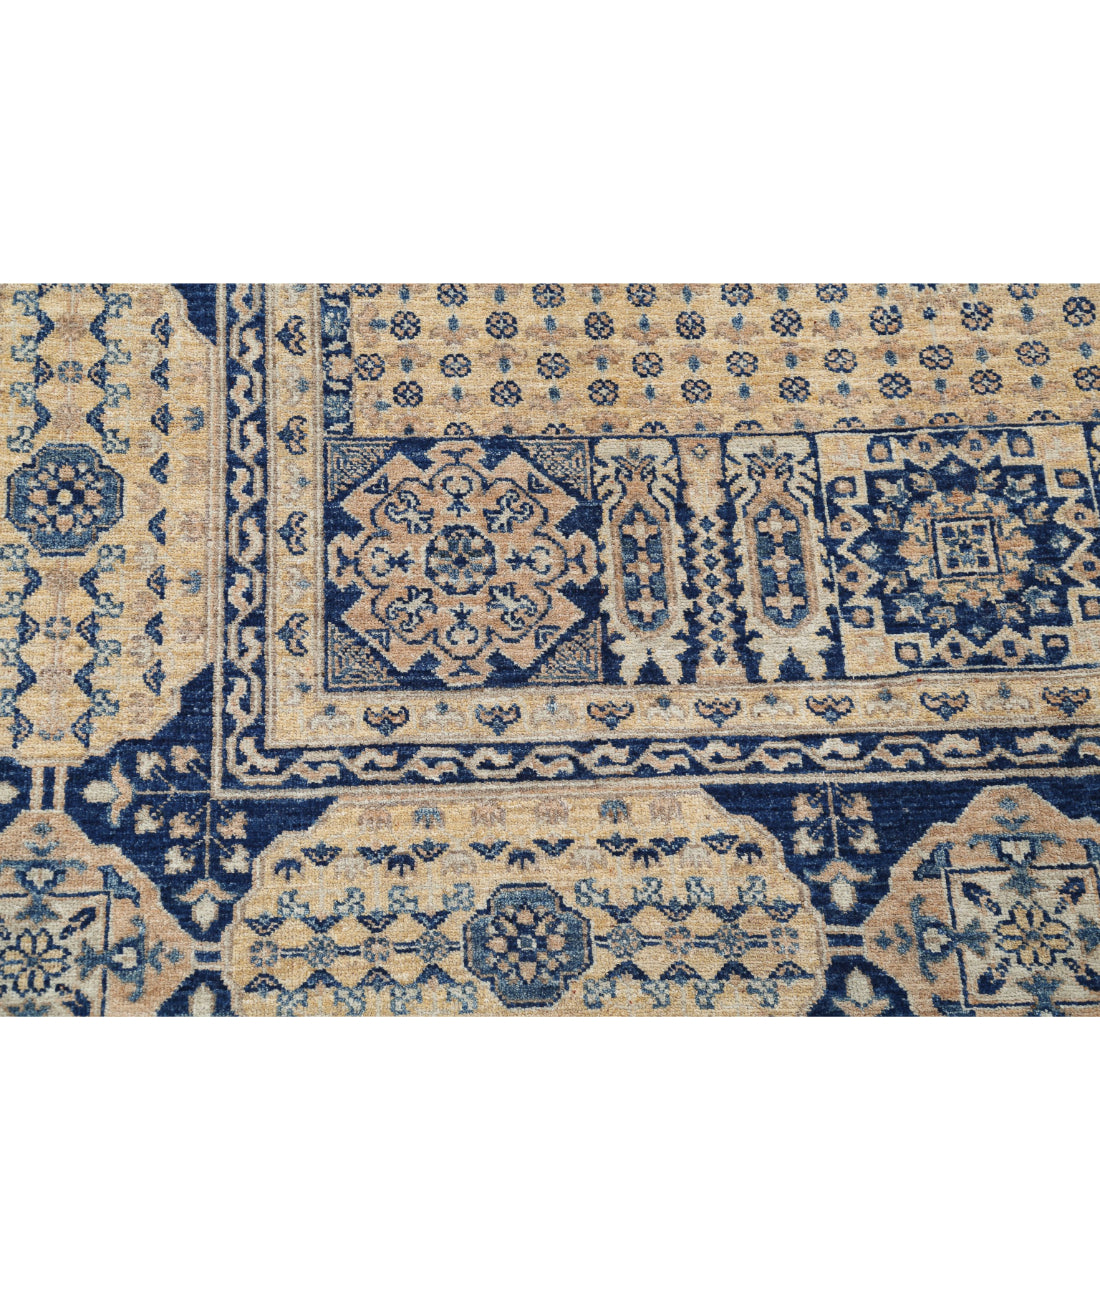 Hand Knotted Mamluk Wool Rug - 6'5'' x 9'4'' 6'5'' x 9'4'' (193 X 280) / Tan / Blue